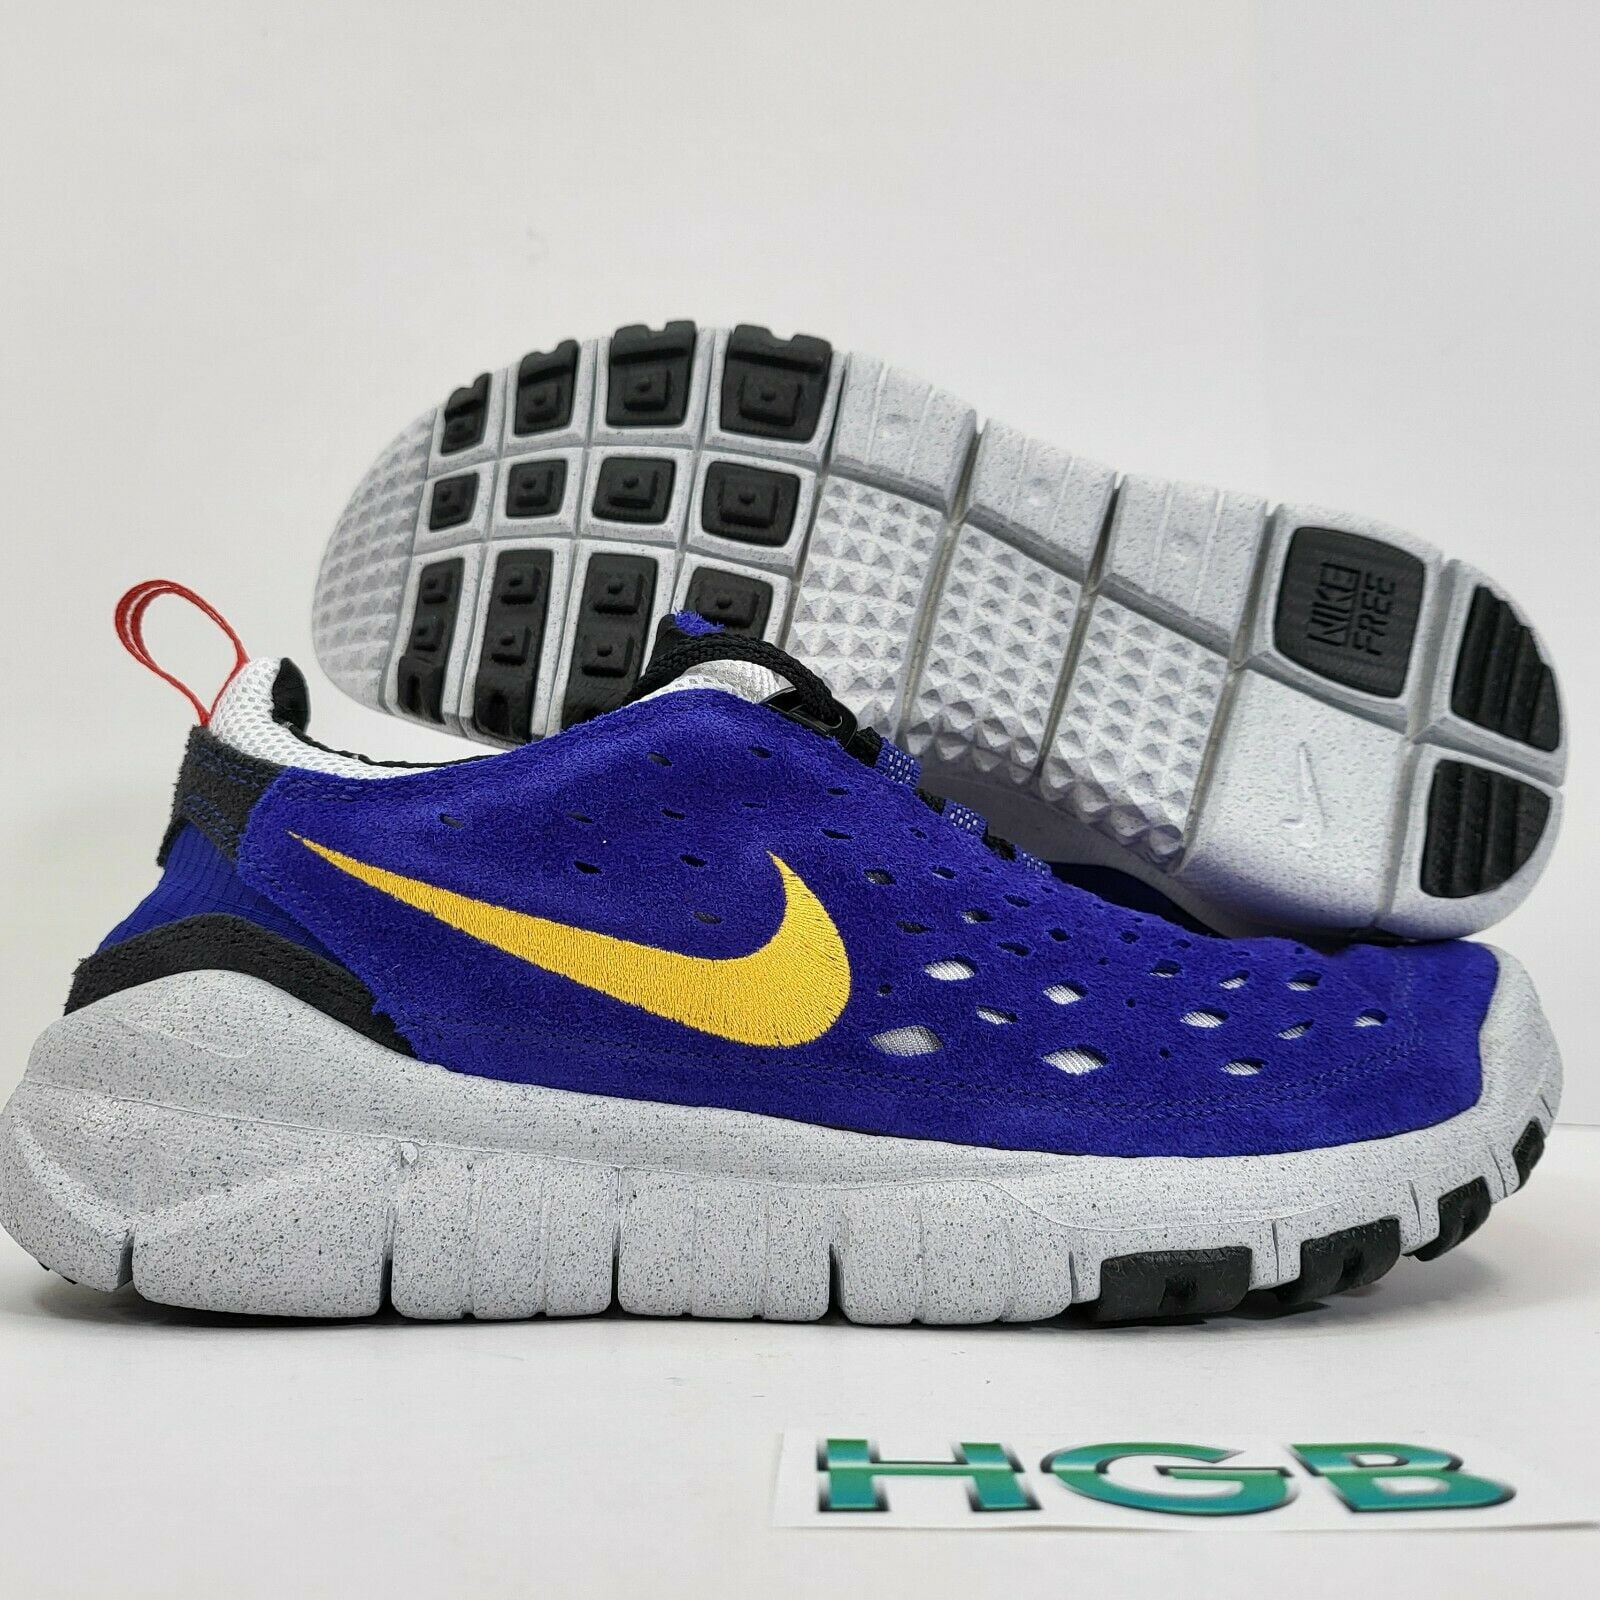 Perth Uitstekend harpoen Nike Free Run Trail Men's Limited Edition Sneaker Shoe Athletic Blue  CW5814-401 - Walmart.com